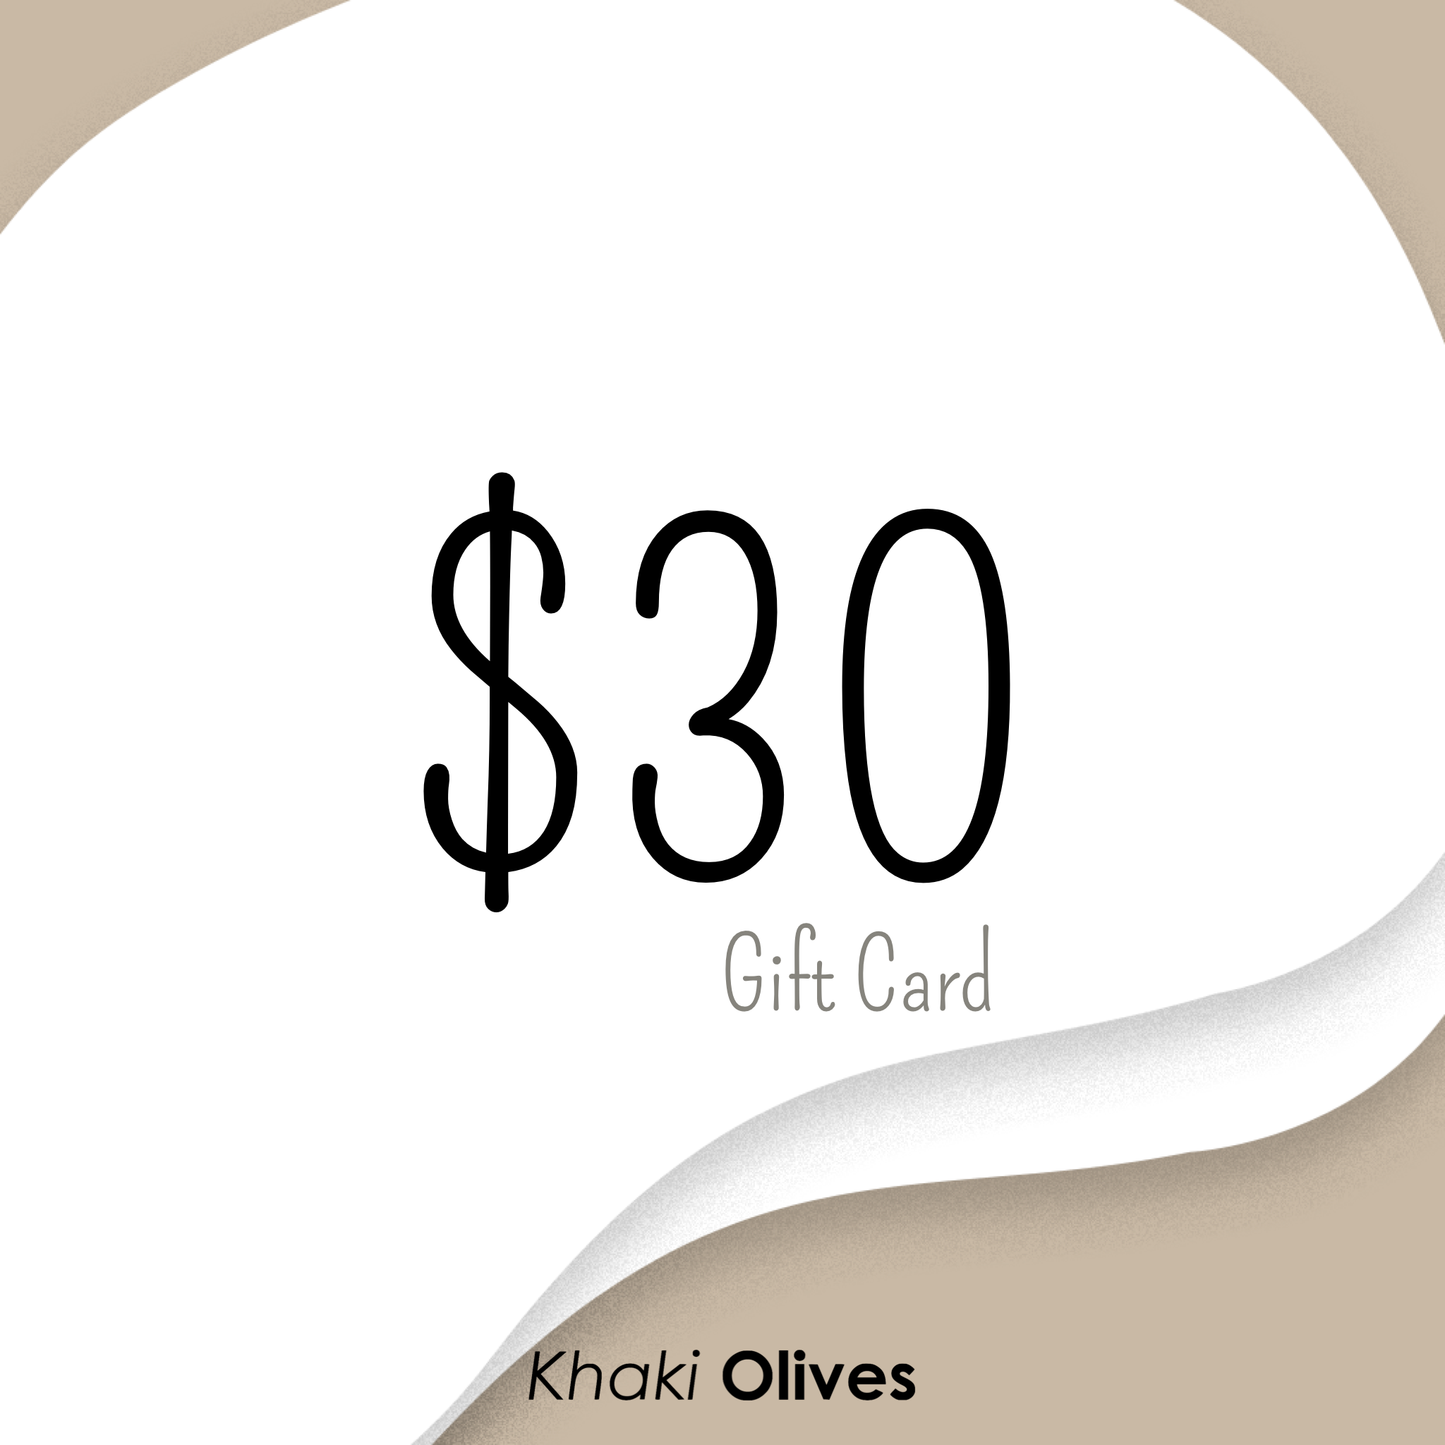 Khaki Olives e-Gift Card - $30